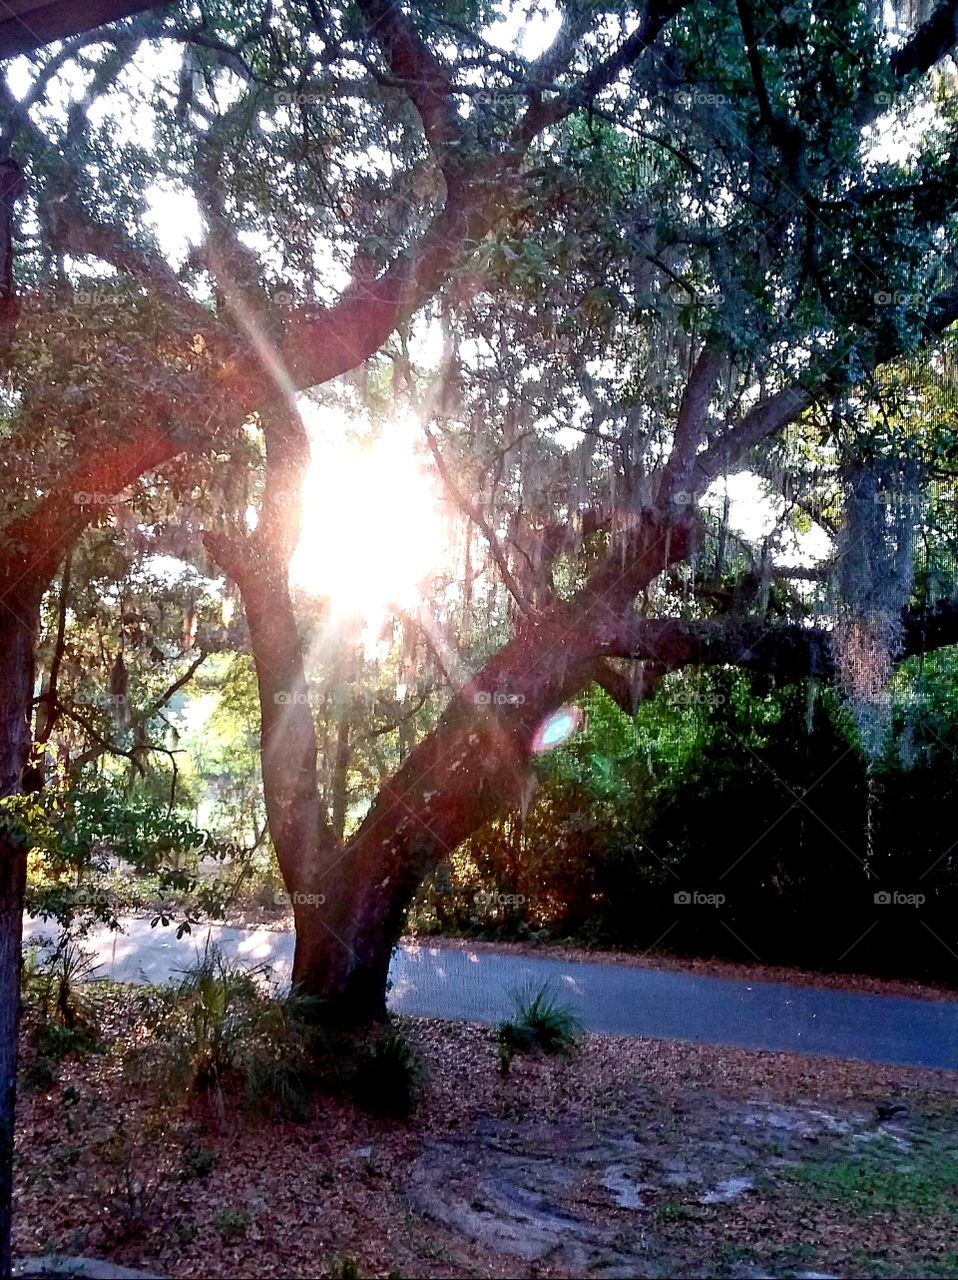 Goodmorning sunrise . Shining beautiful through the Live Oak